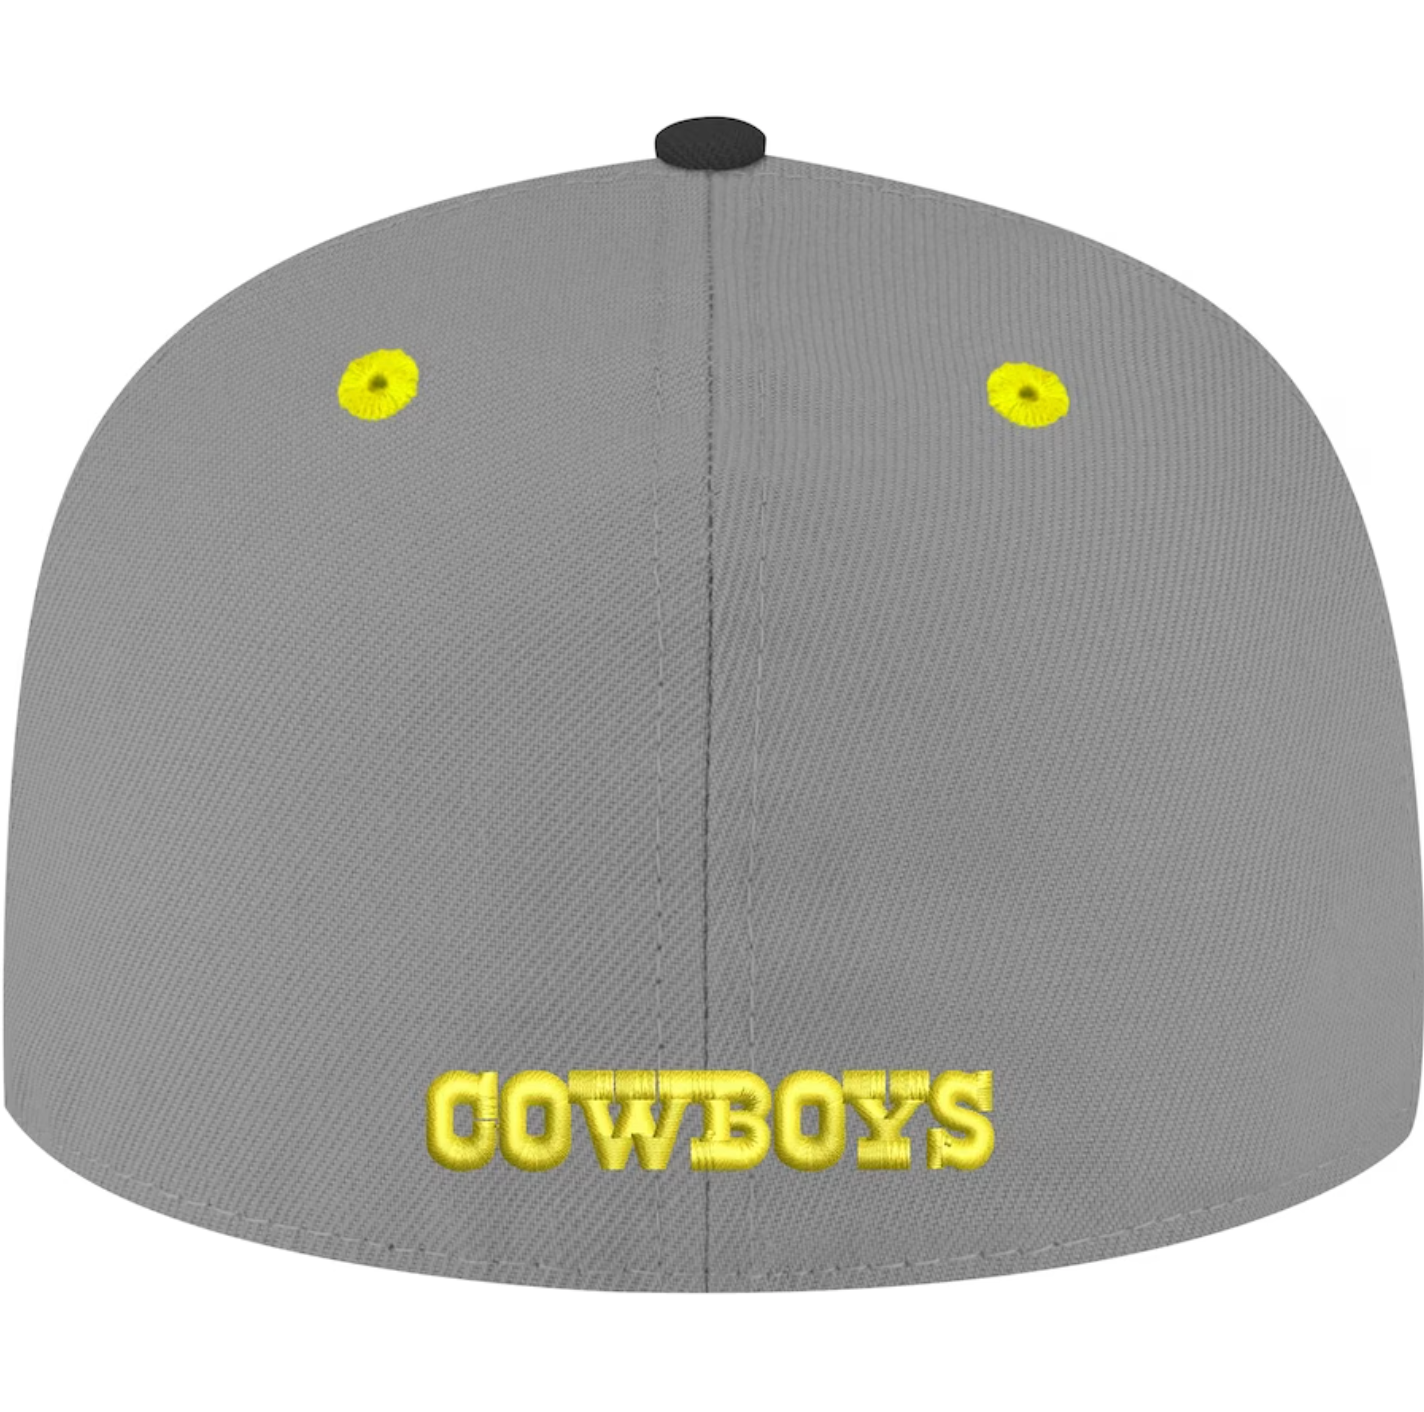 Dallas Cowboys New Era VOLT Exclusive 59Fifty Fitted Hat - Gray/Black/Volt